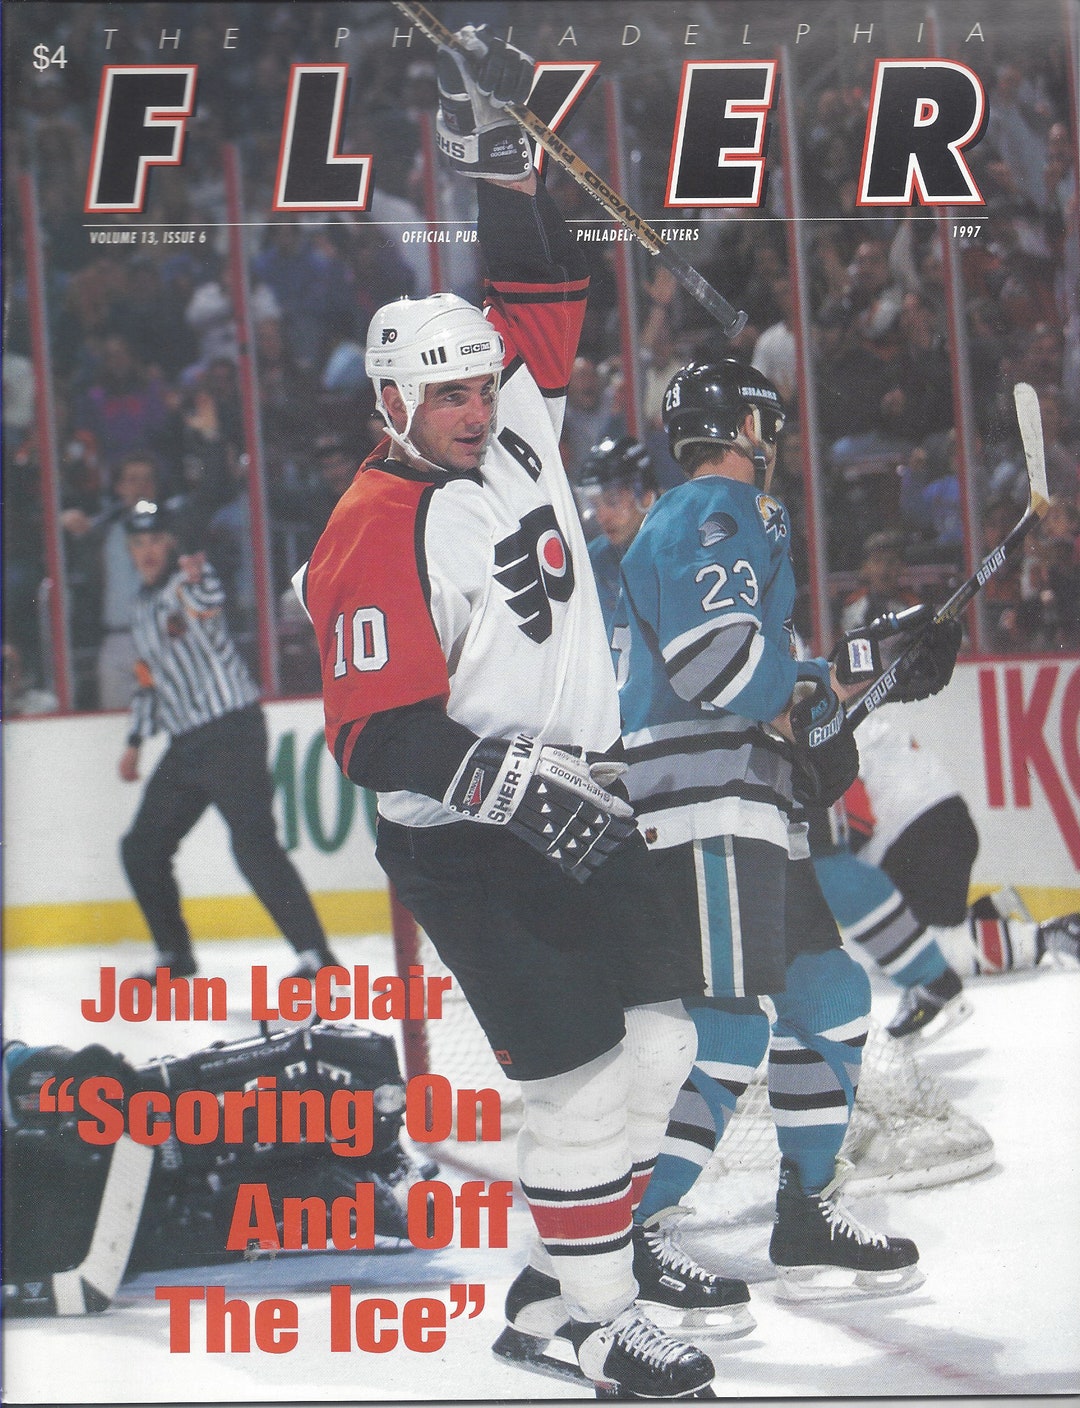 The Philadelphia Flyer - official Flyers program - John LeClair (1996-97  season)